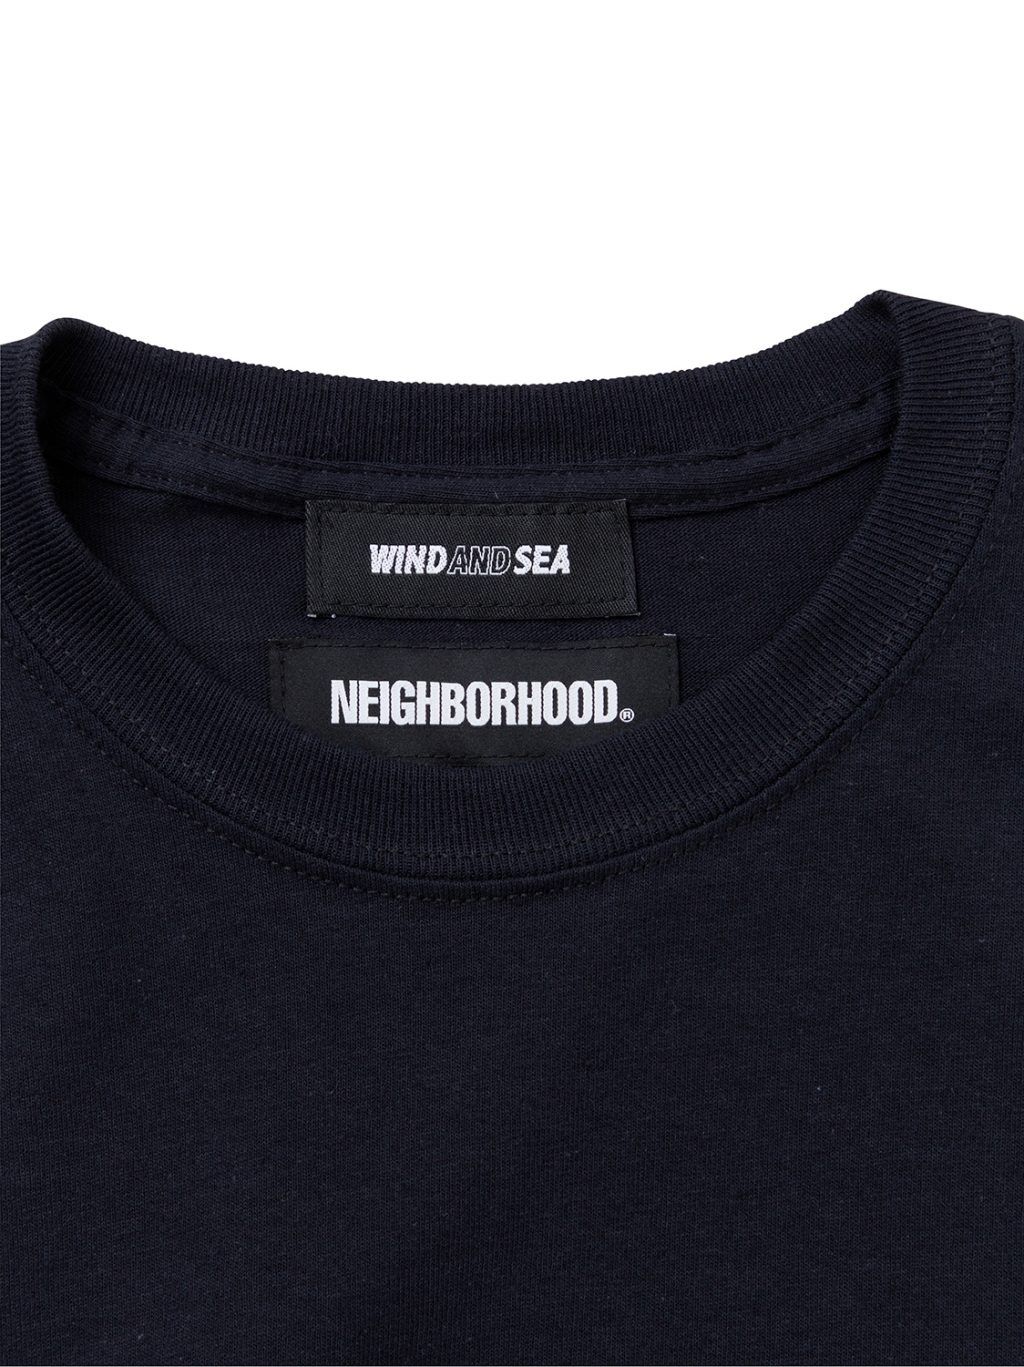 NEIGHBORHOOD × WIND AND SEAの新作コラボレーションアイテムが6月5日 